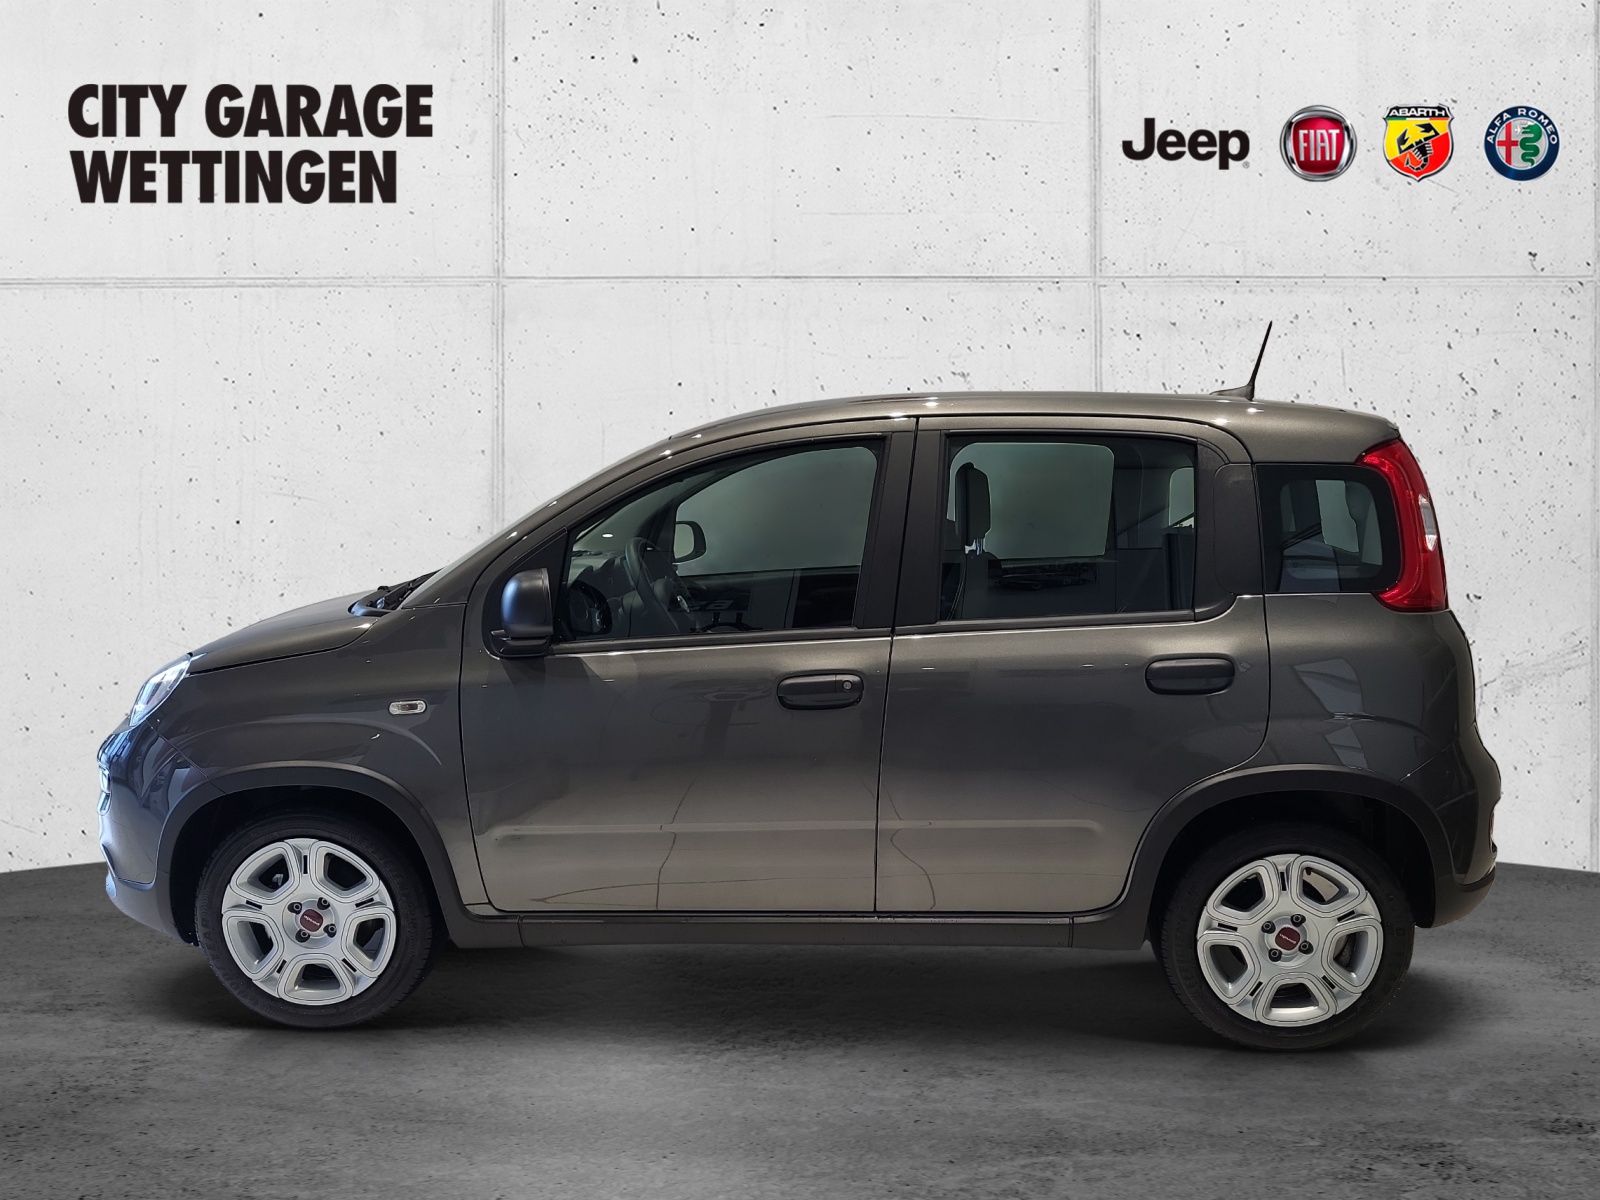 Fiat Tipo - City Garage Wettingen